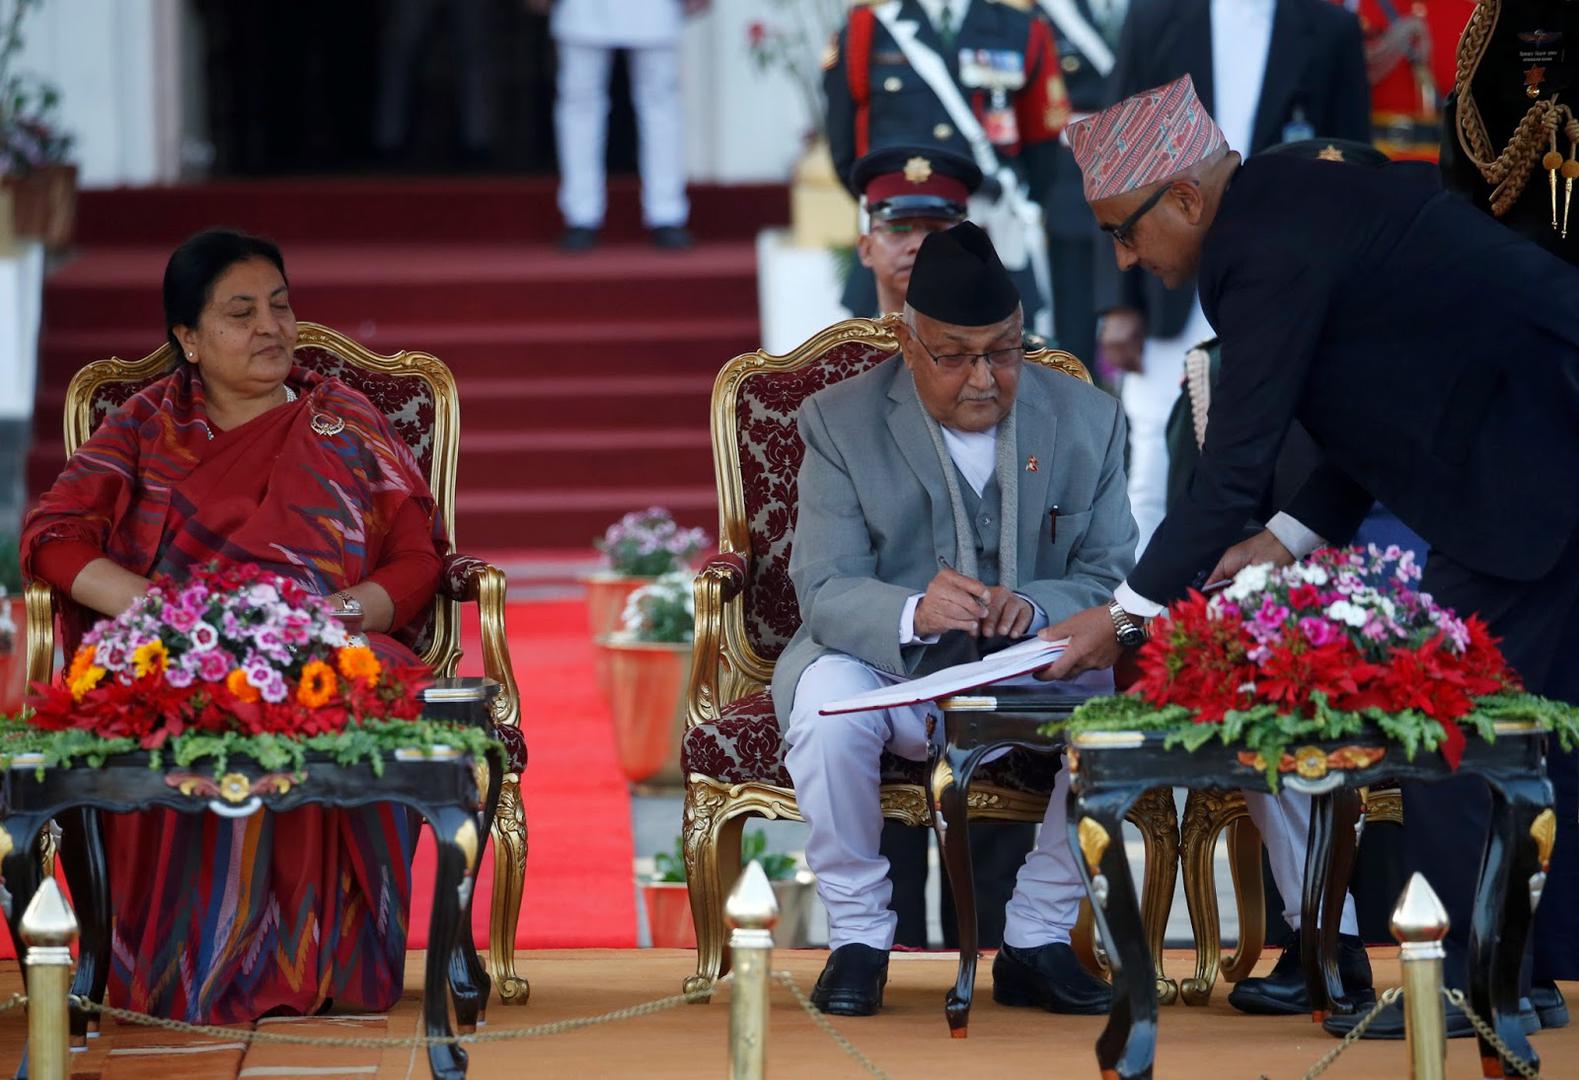 Nepal’s Prime Minister Khadga Prasad Oli signs the oath of office papers next to President Bidhya Devi Bhandari in Kathmandu, Nepal, February 15, 2018.